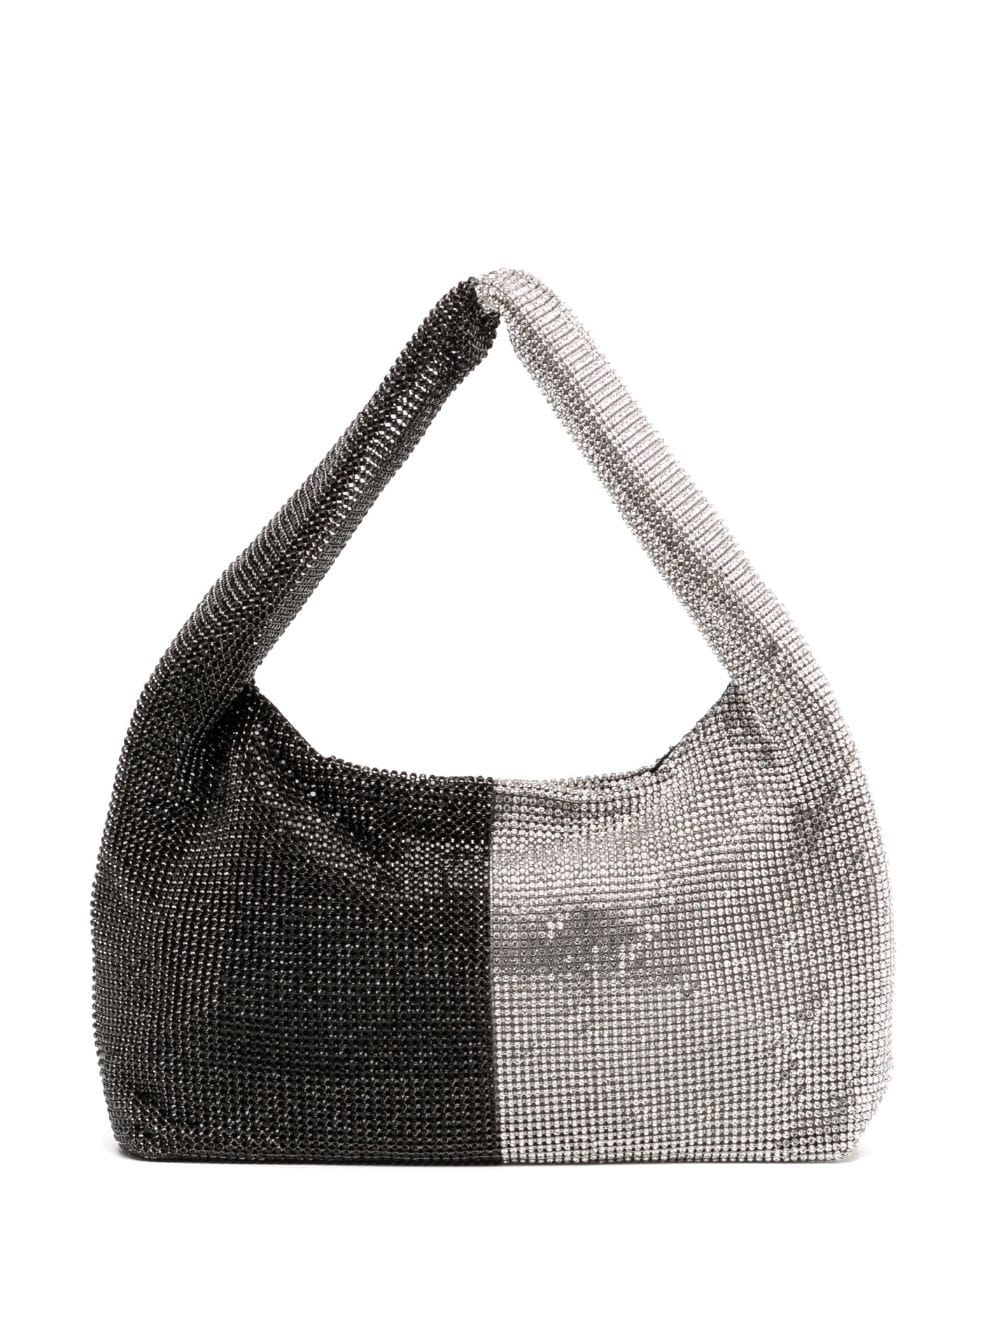 Kara Mini Crystal Mesh Hobo Bag  - Black/white - Brass